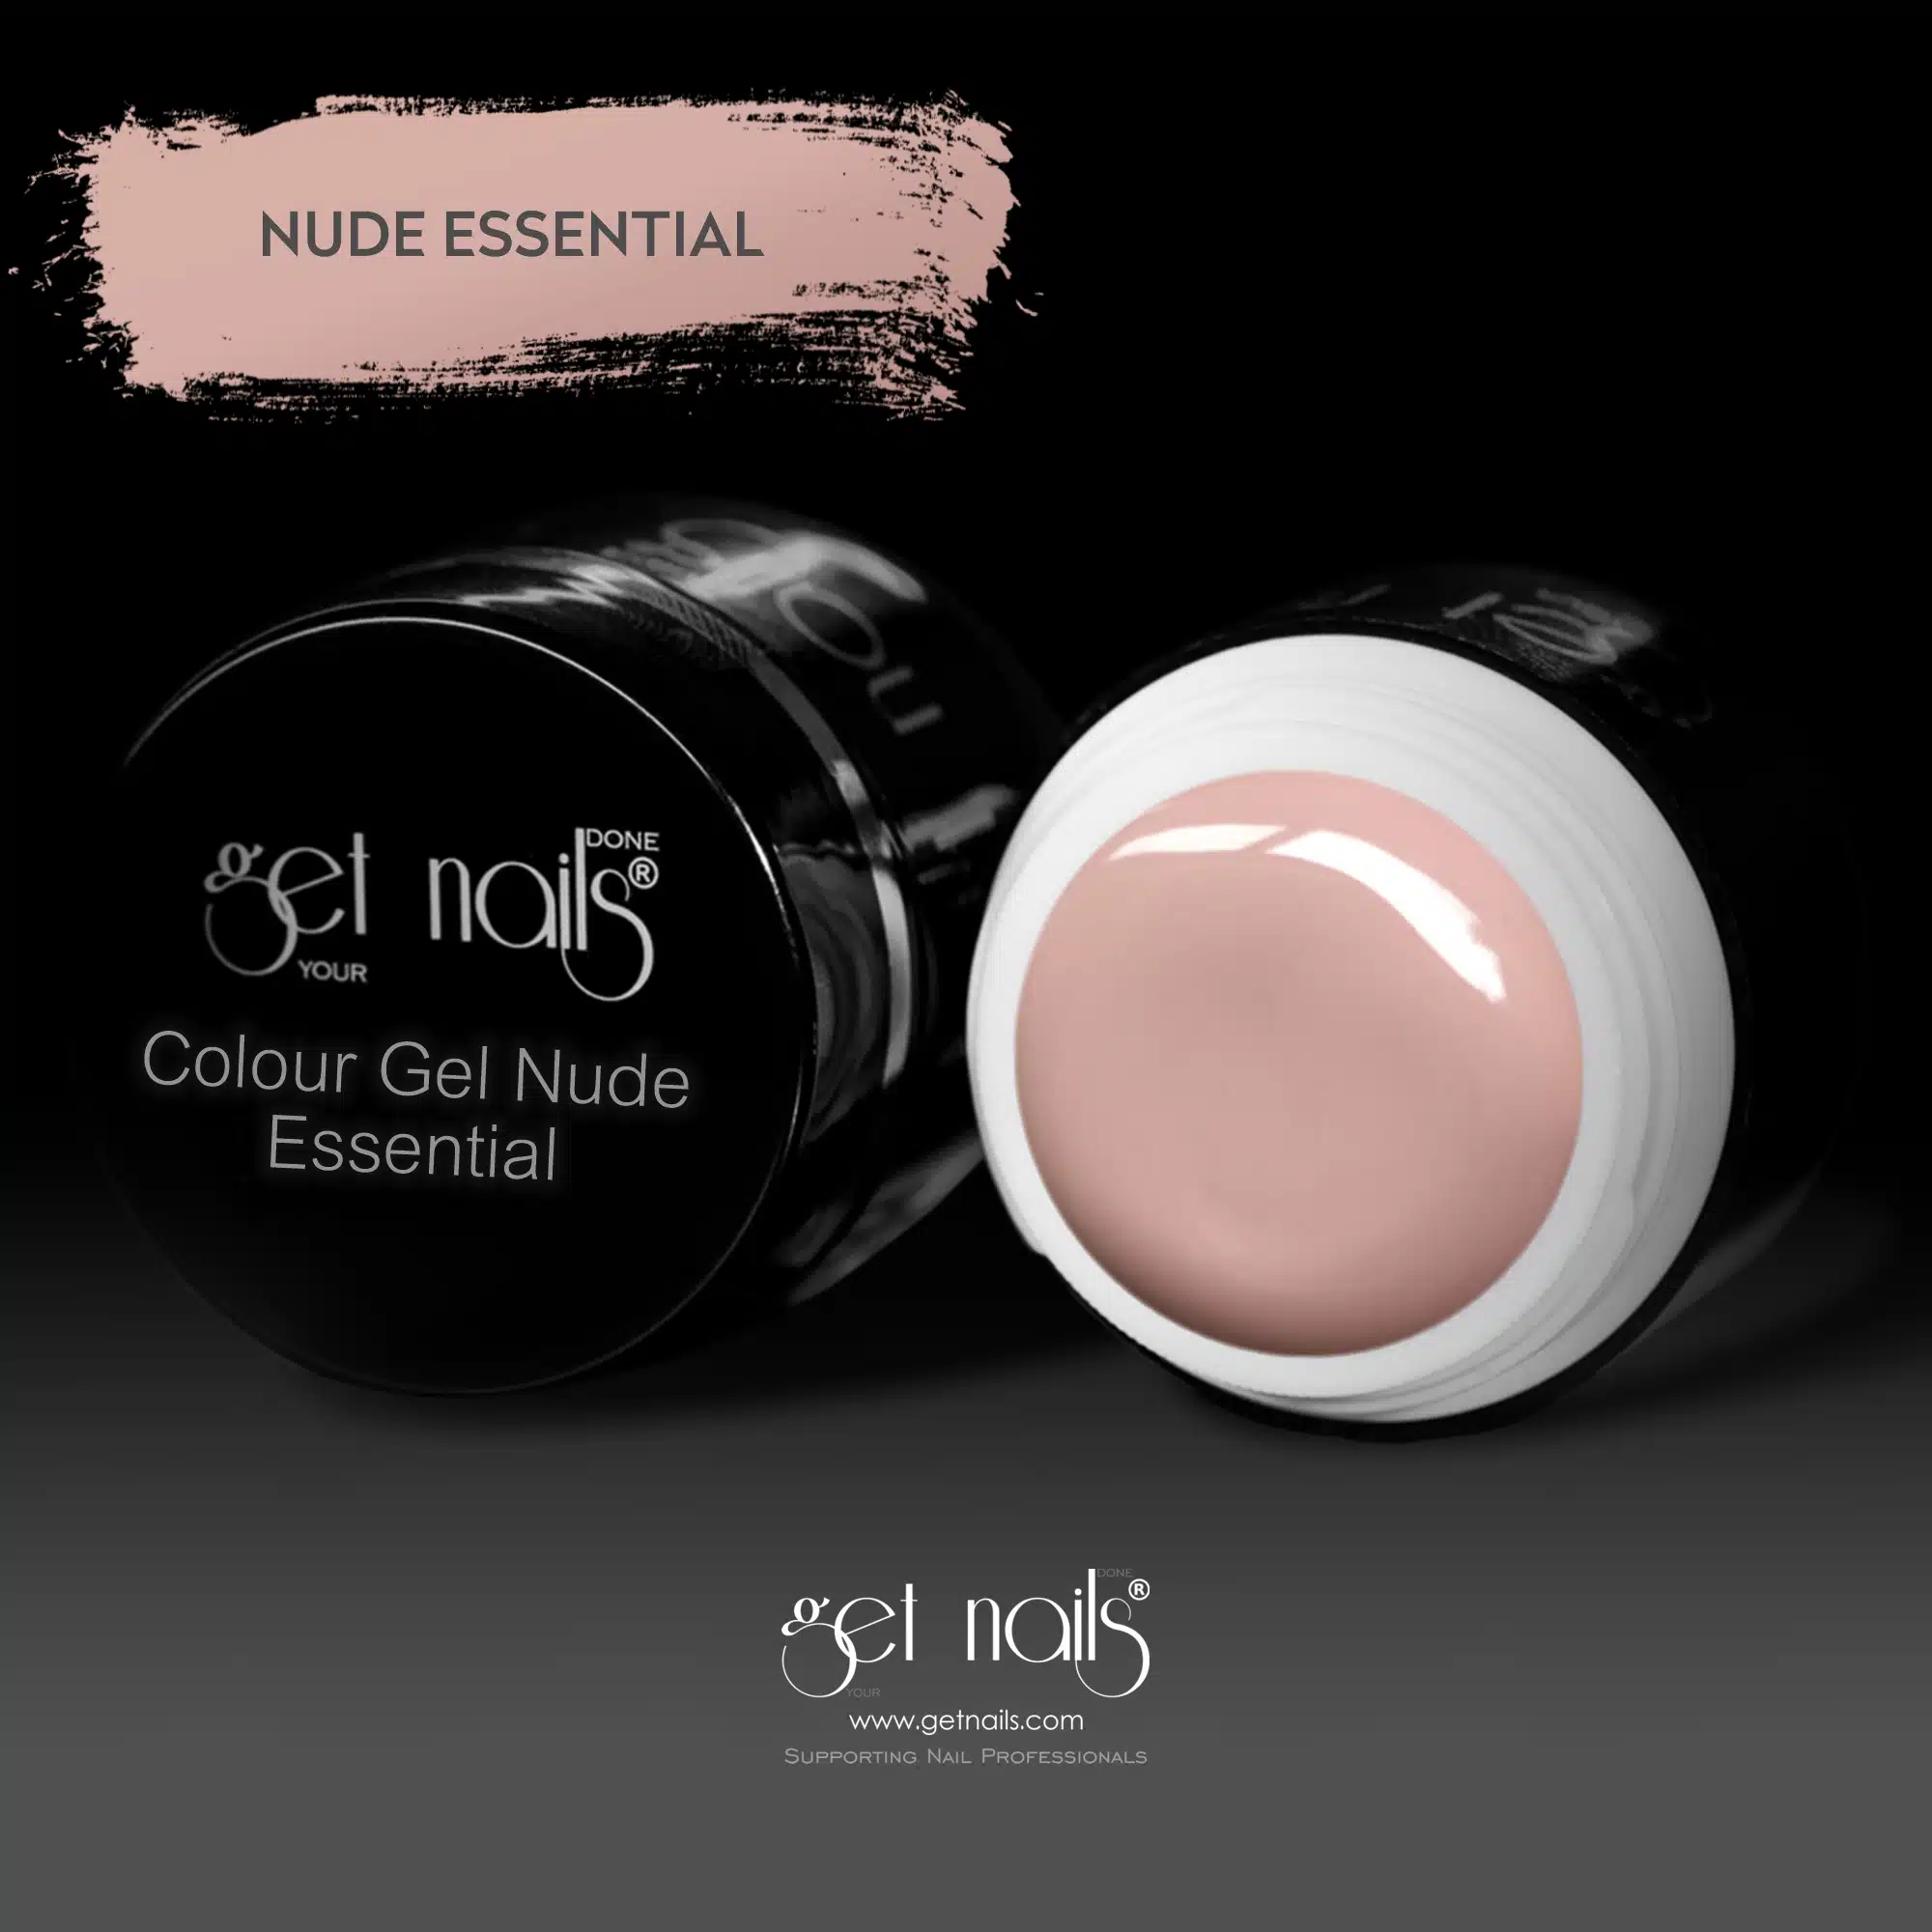 Get Nails Austria - Gel colorato Nude Essential 5g